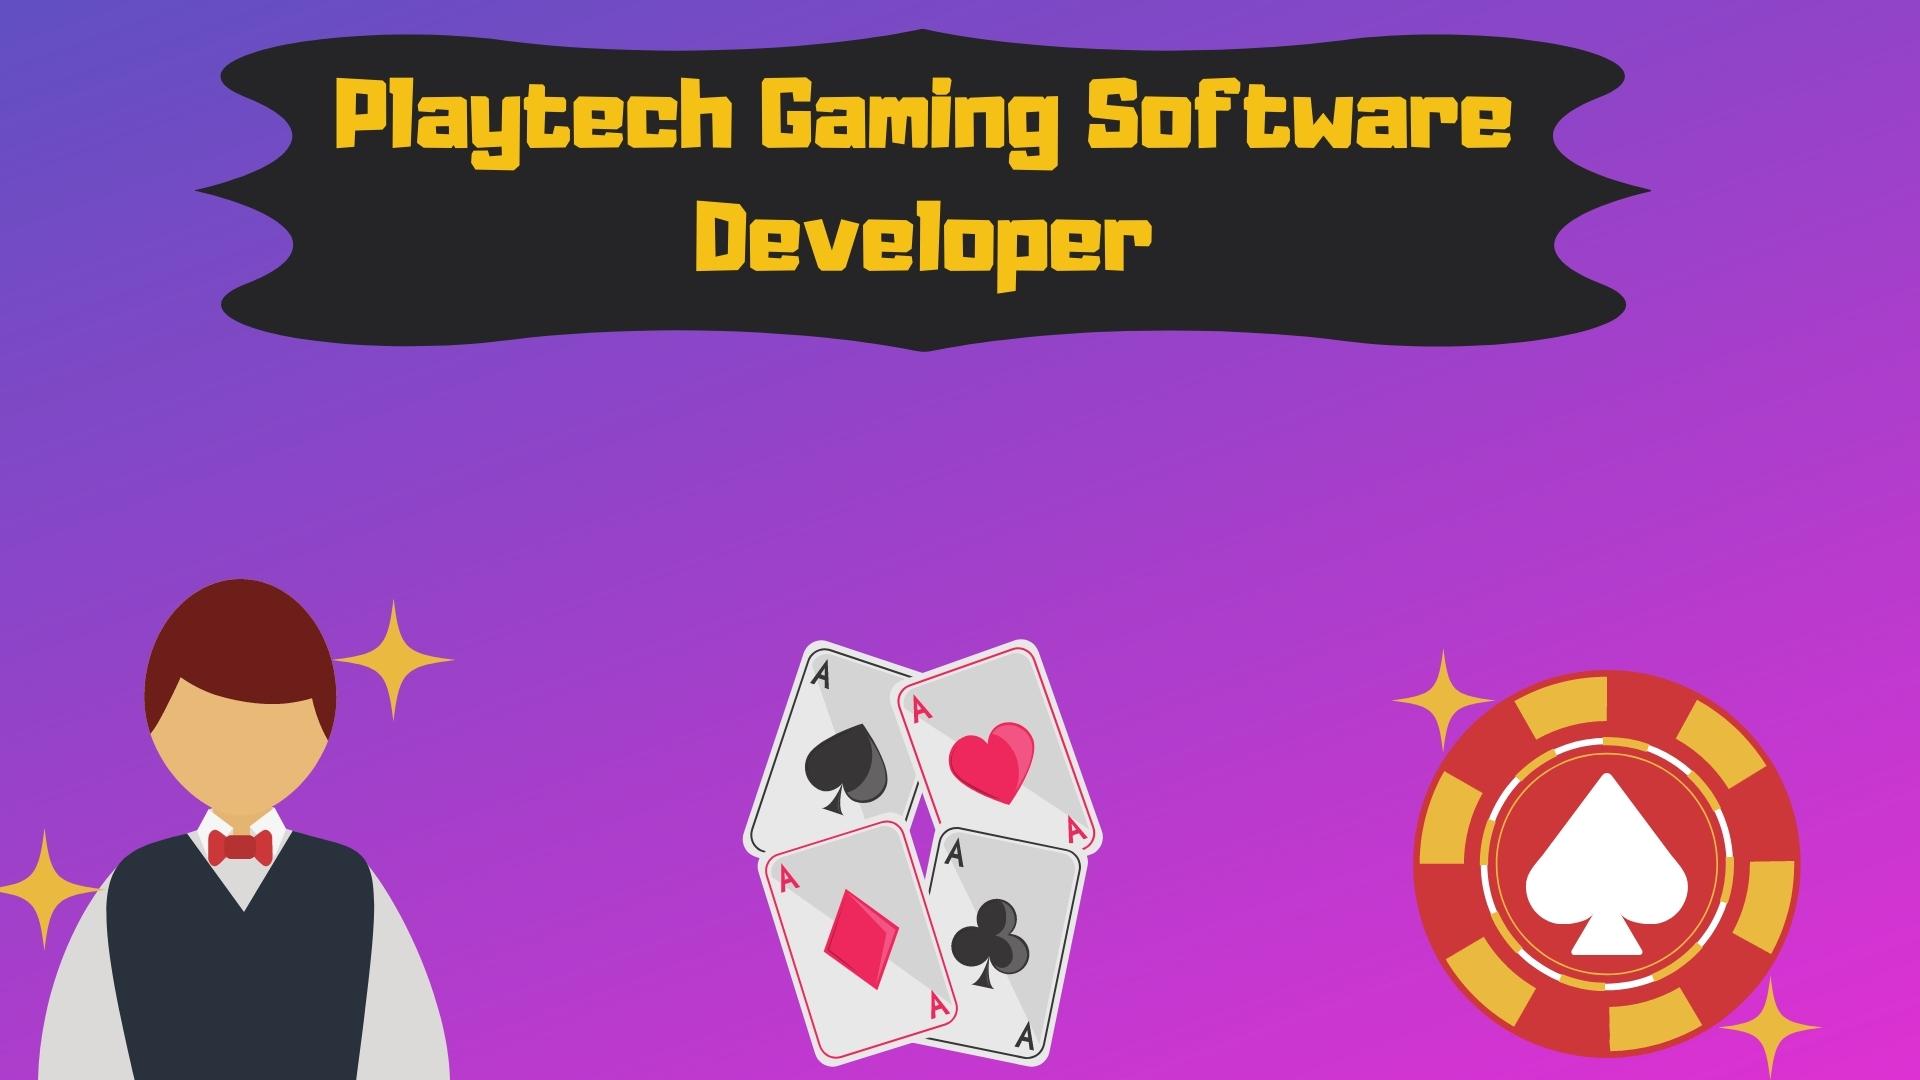 Playtech Gaming Software Developer